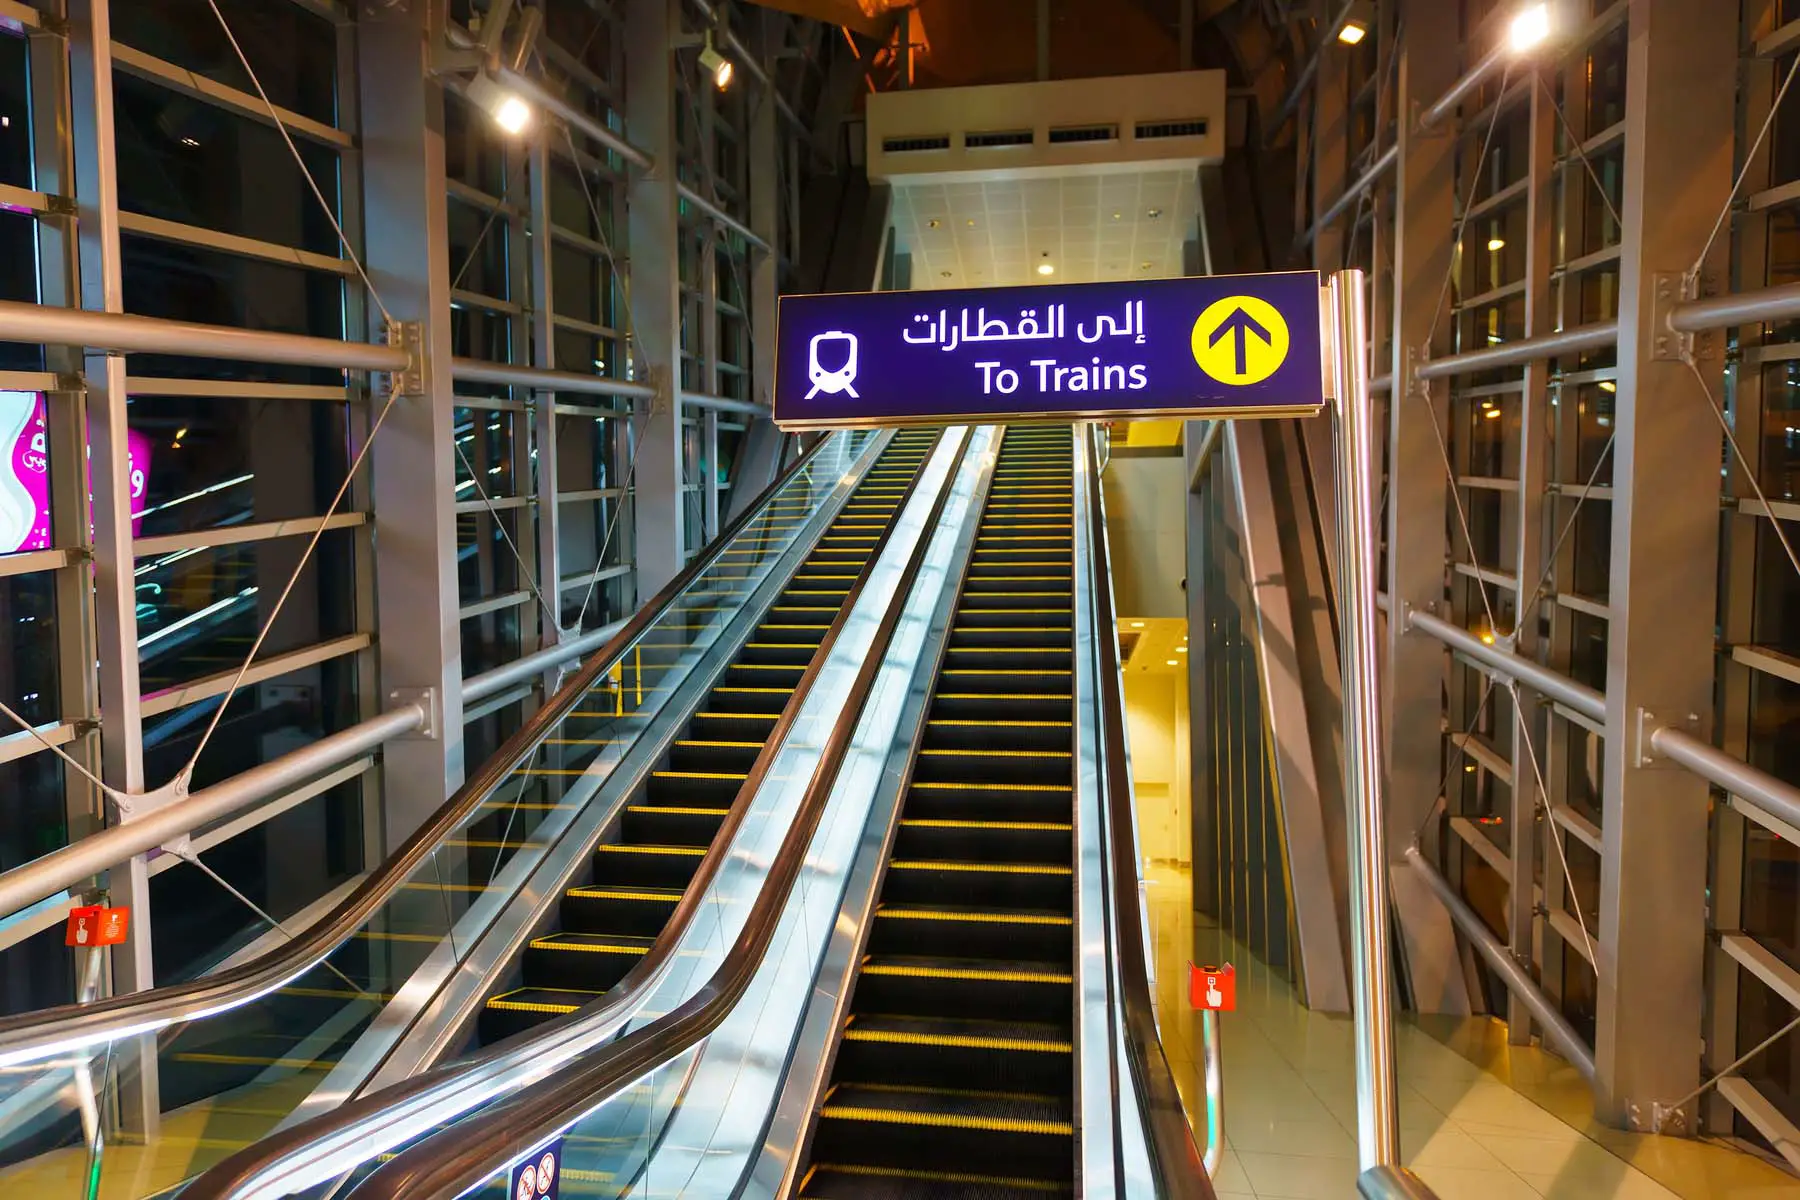 escalator in a metro station in UAE